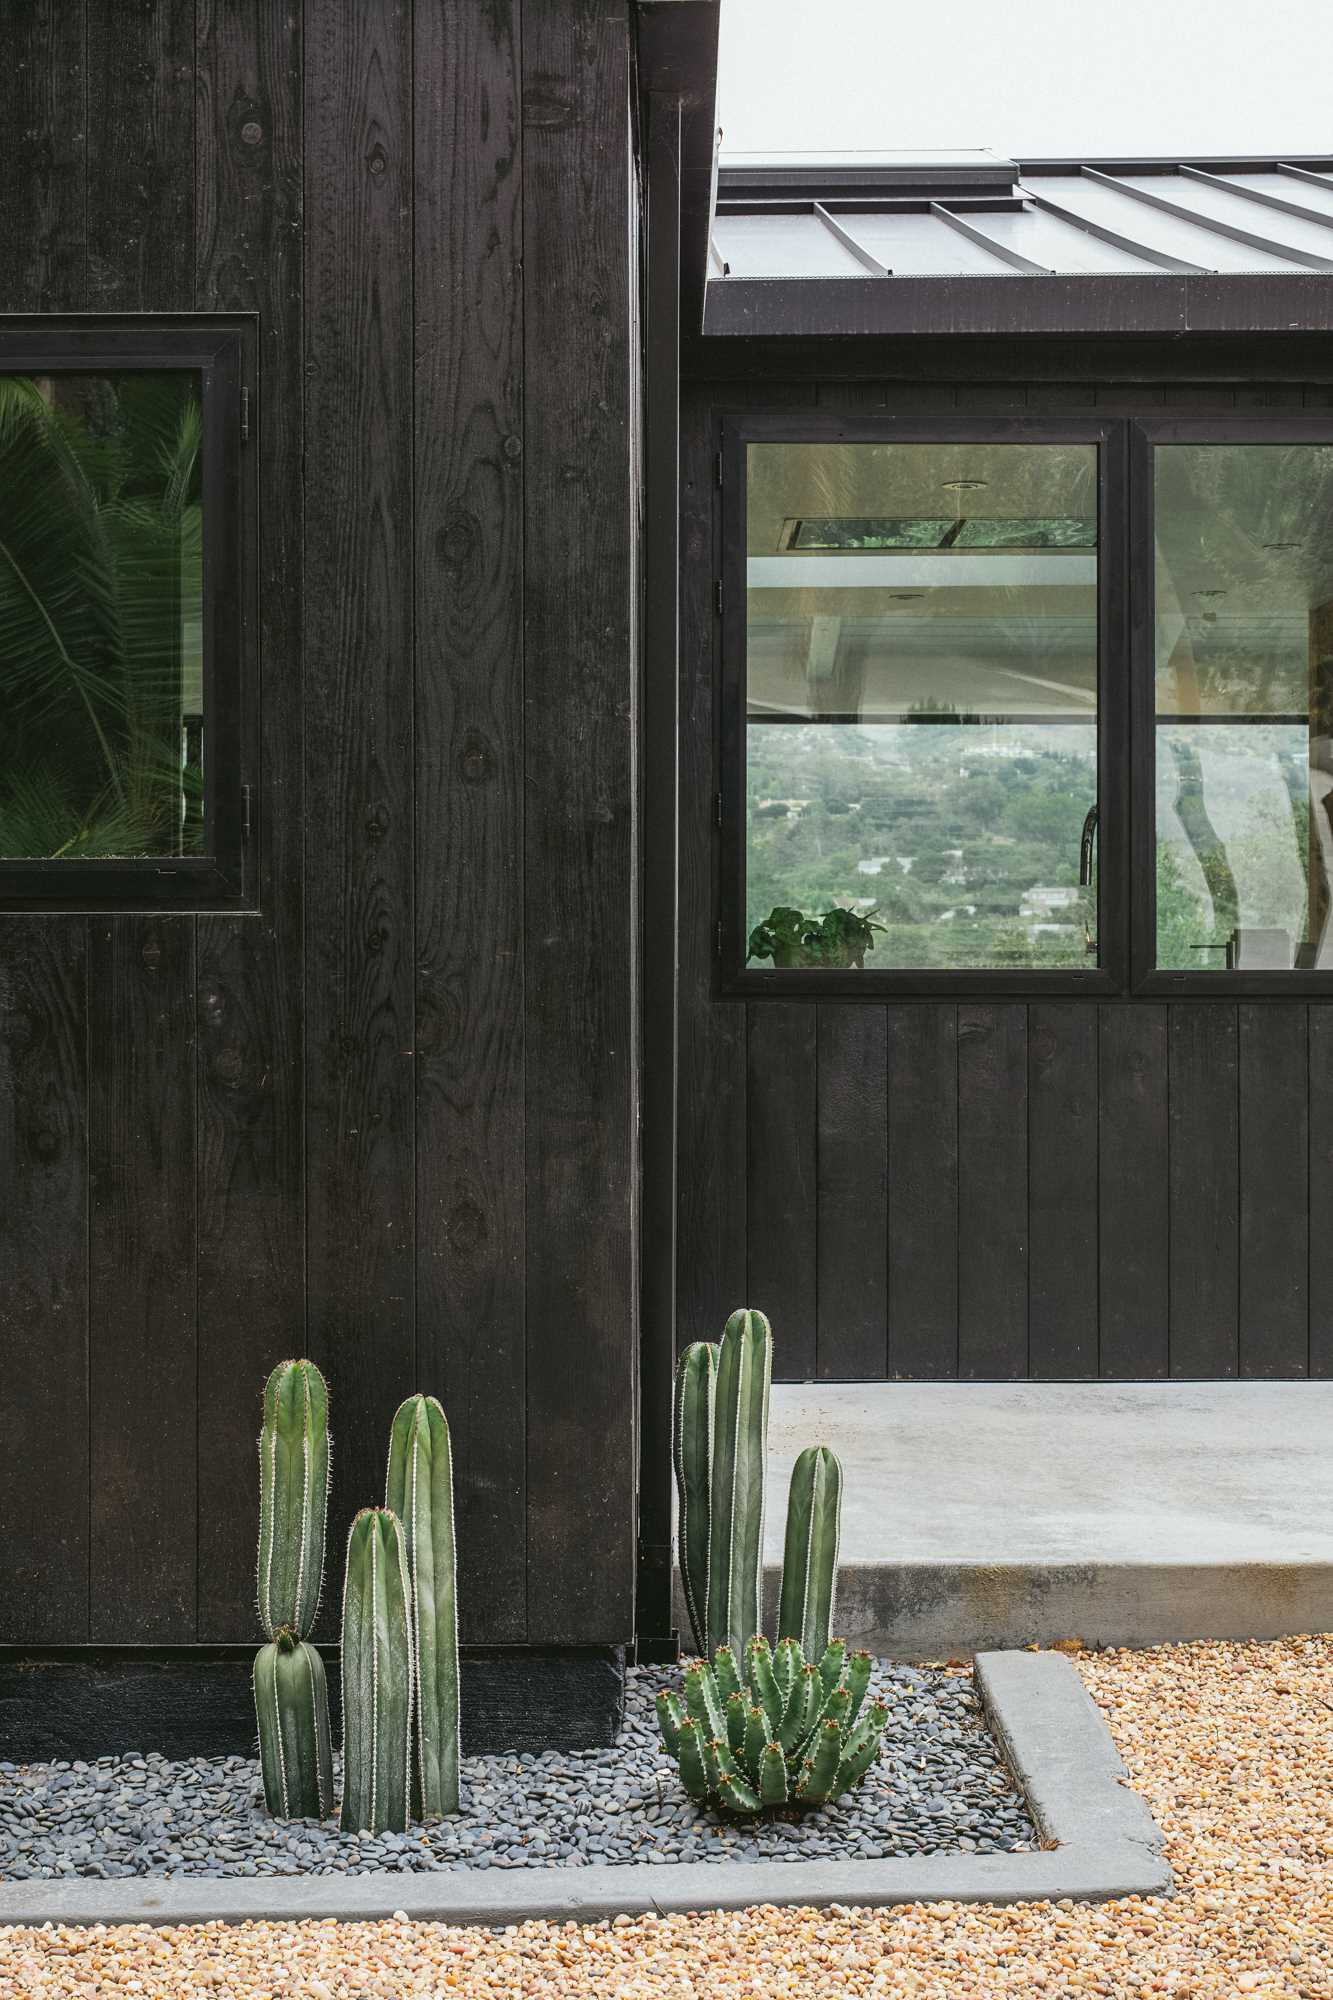 Desert-inspired landscaping for a modern house with black exterior.